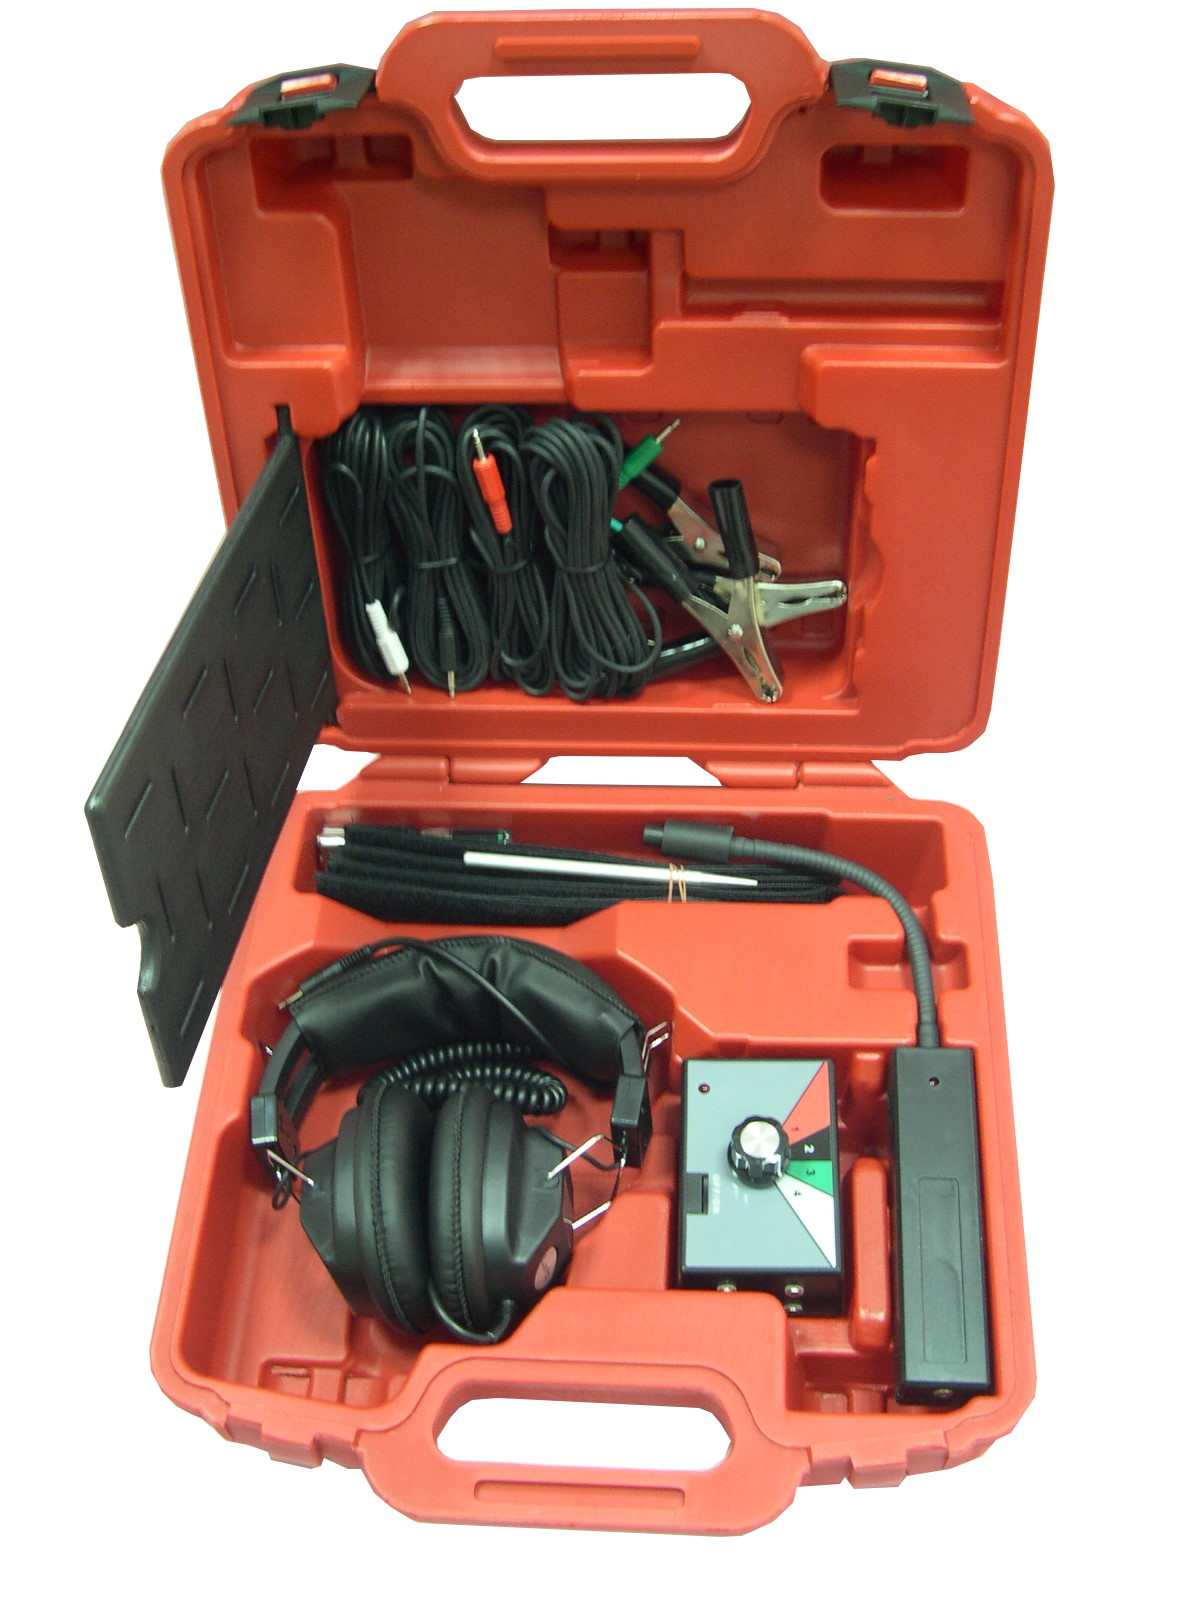 Hafix Motor Stethoskop. KFZ Werkzeug Motorstethoskop zur Diagnose